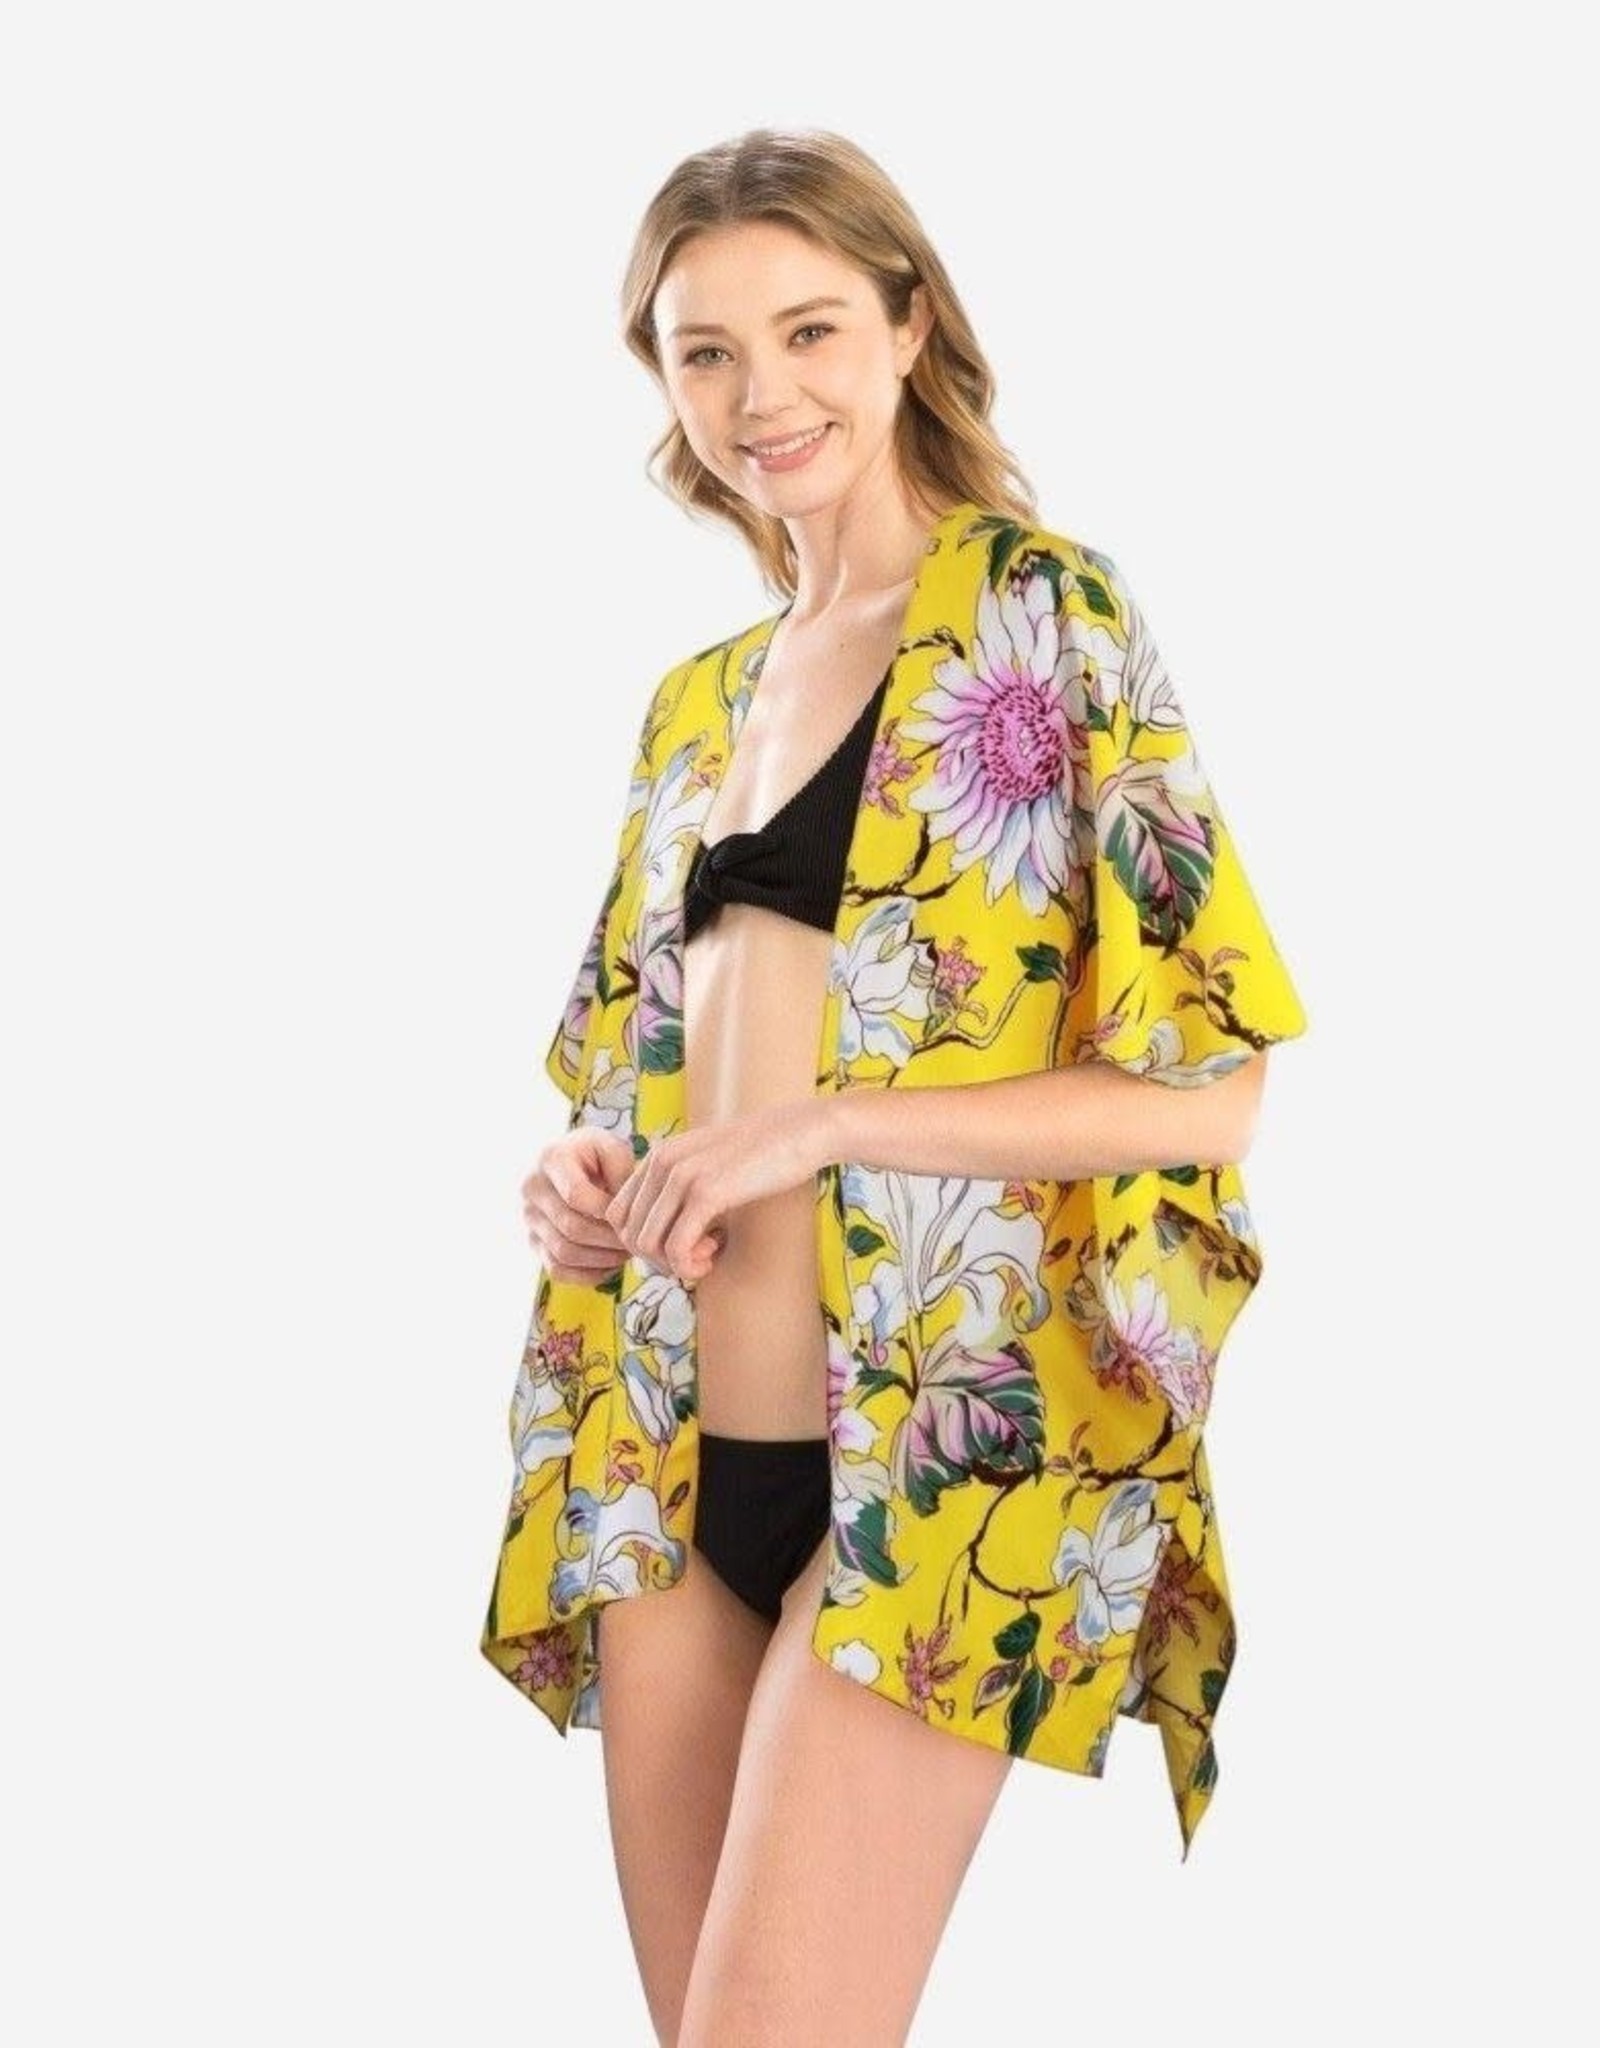 judson 7308807 - Lightweight Vintage Floral Print Kimono  - O/S - Yellow